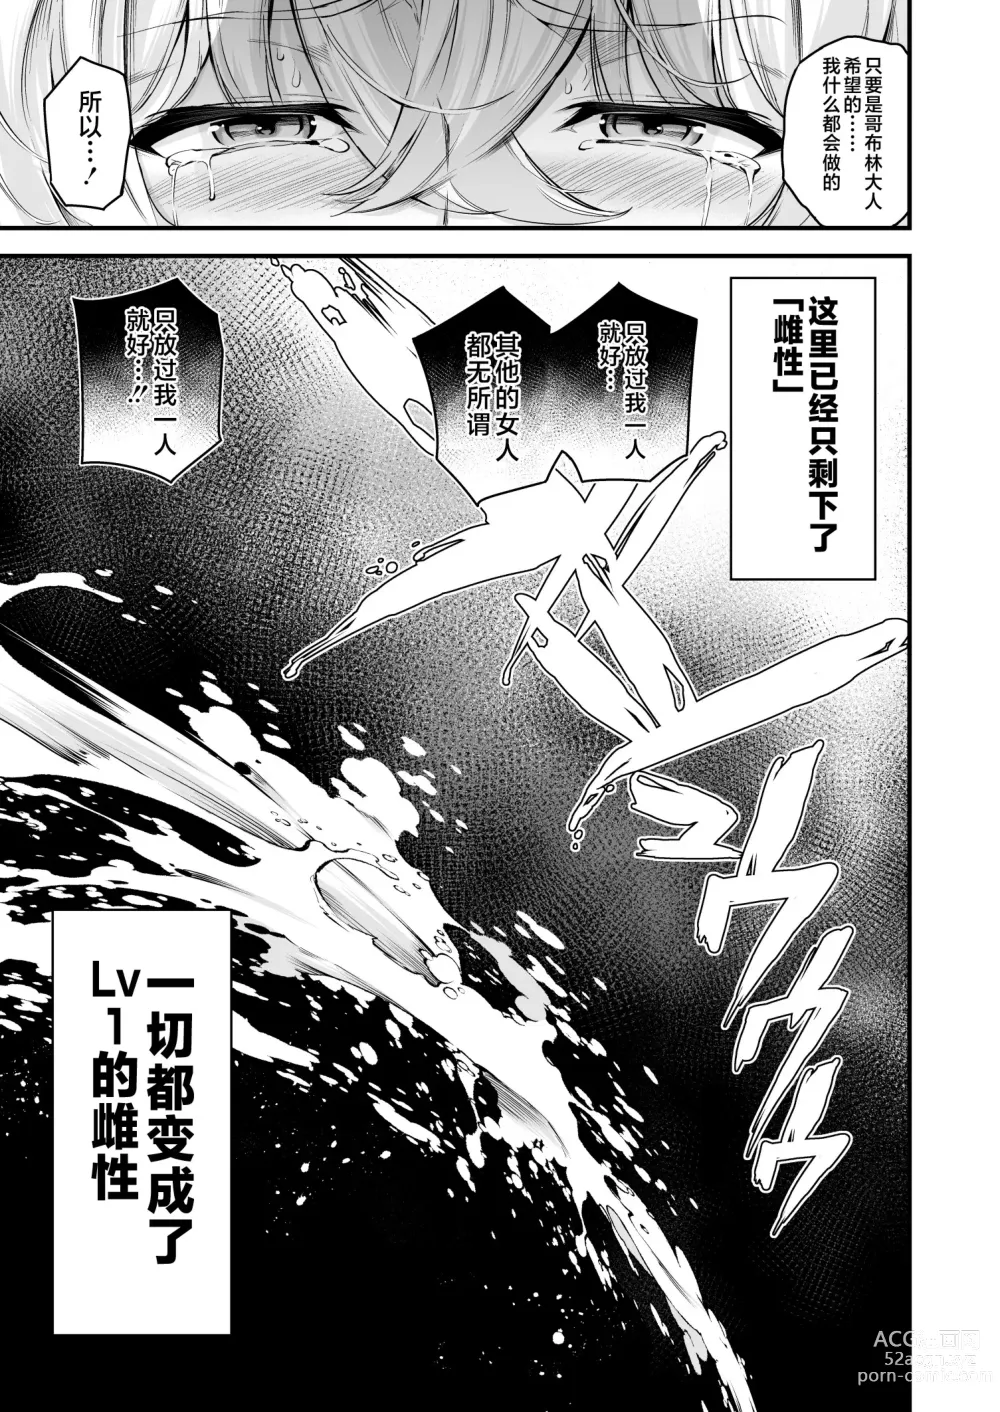 Page 32 of doujinshi Lv1 ni Naru Tokuiten - Singularity that becomes Lv1